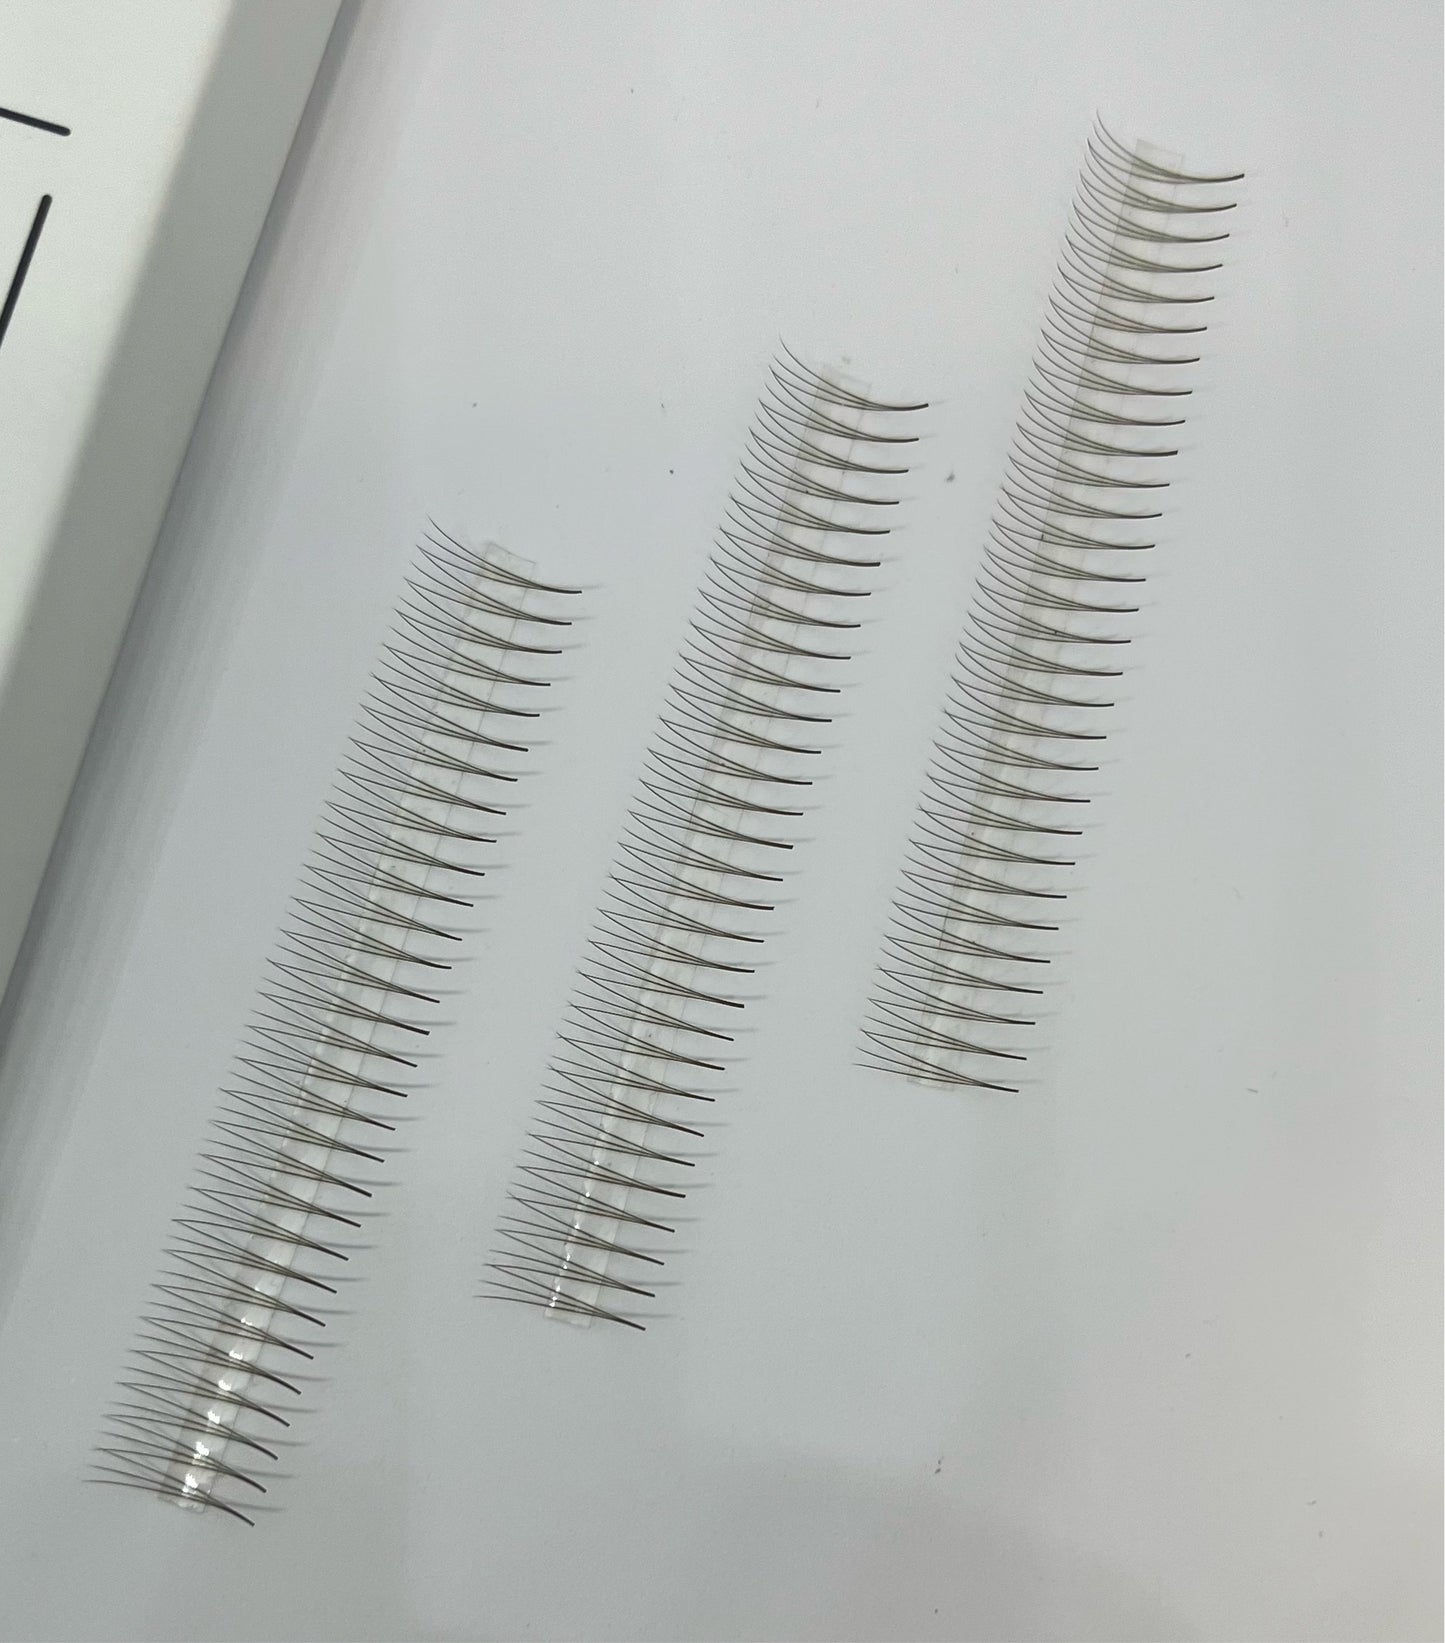 PBR 0.07 BROWN 3D 1000 on strip fans mega volume promade lash trays